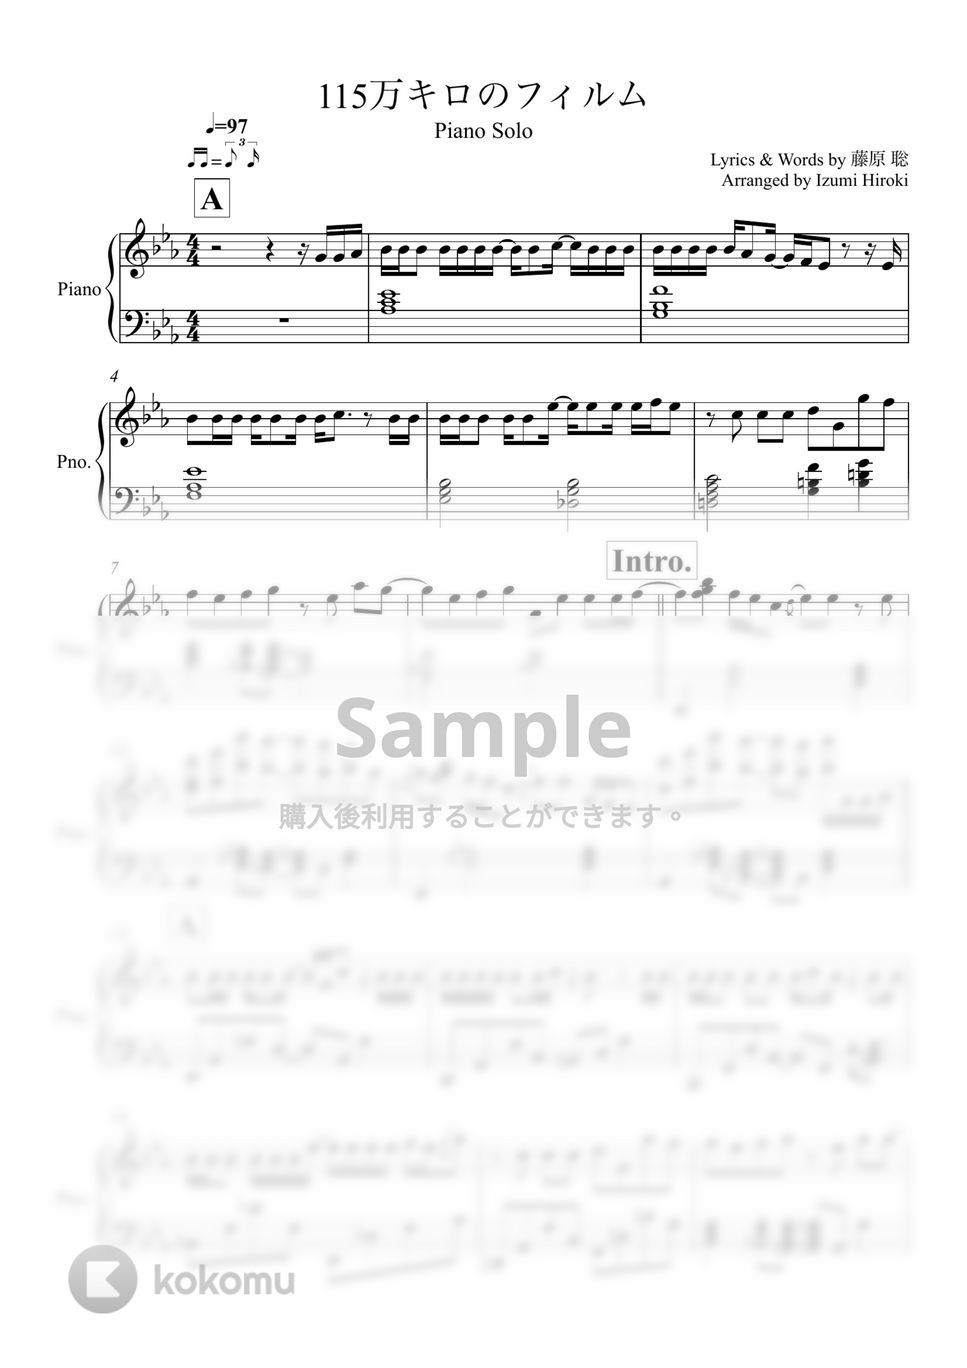 Official髭男dism - 115万キロのフィルム (ピアノソロ) by 泉宏樹